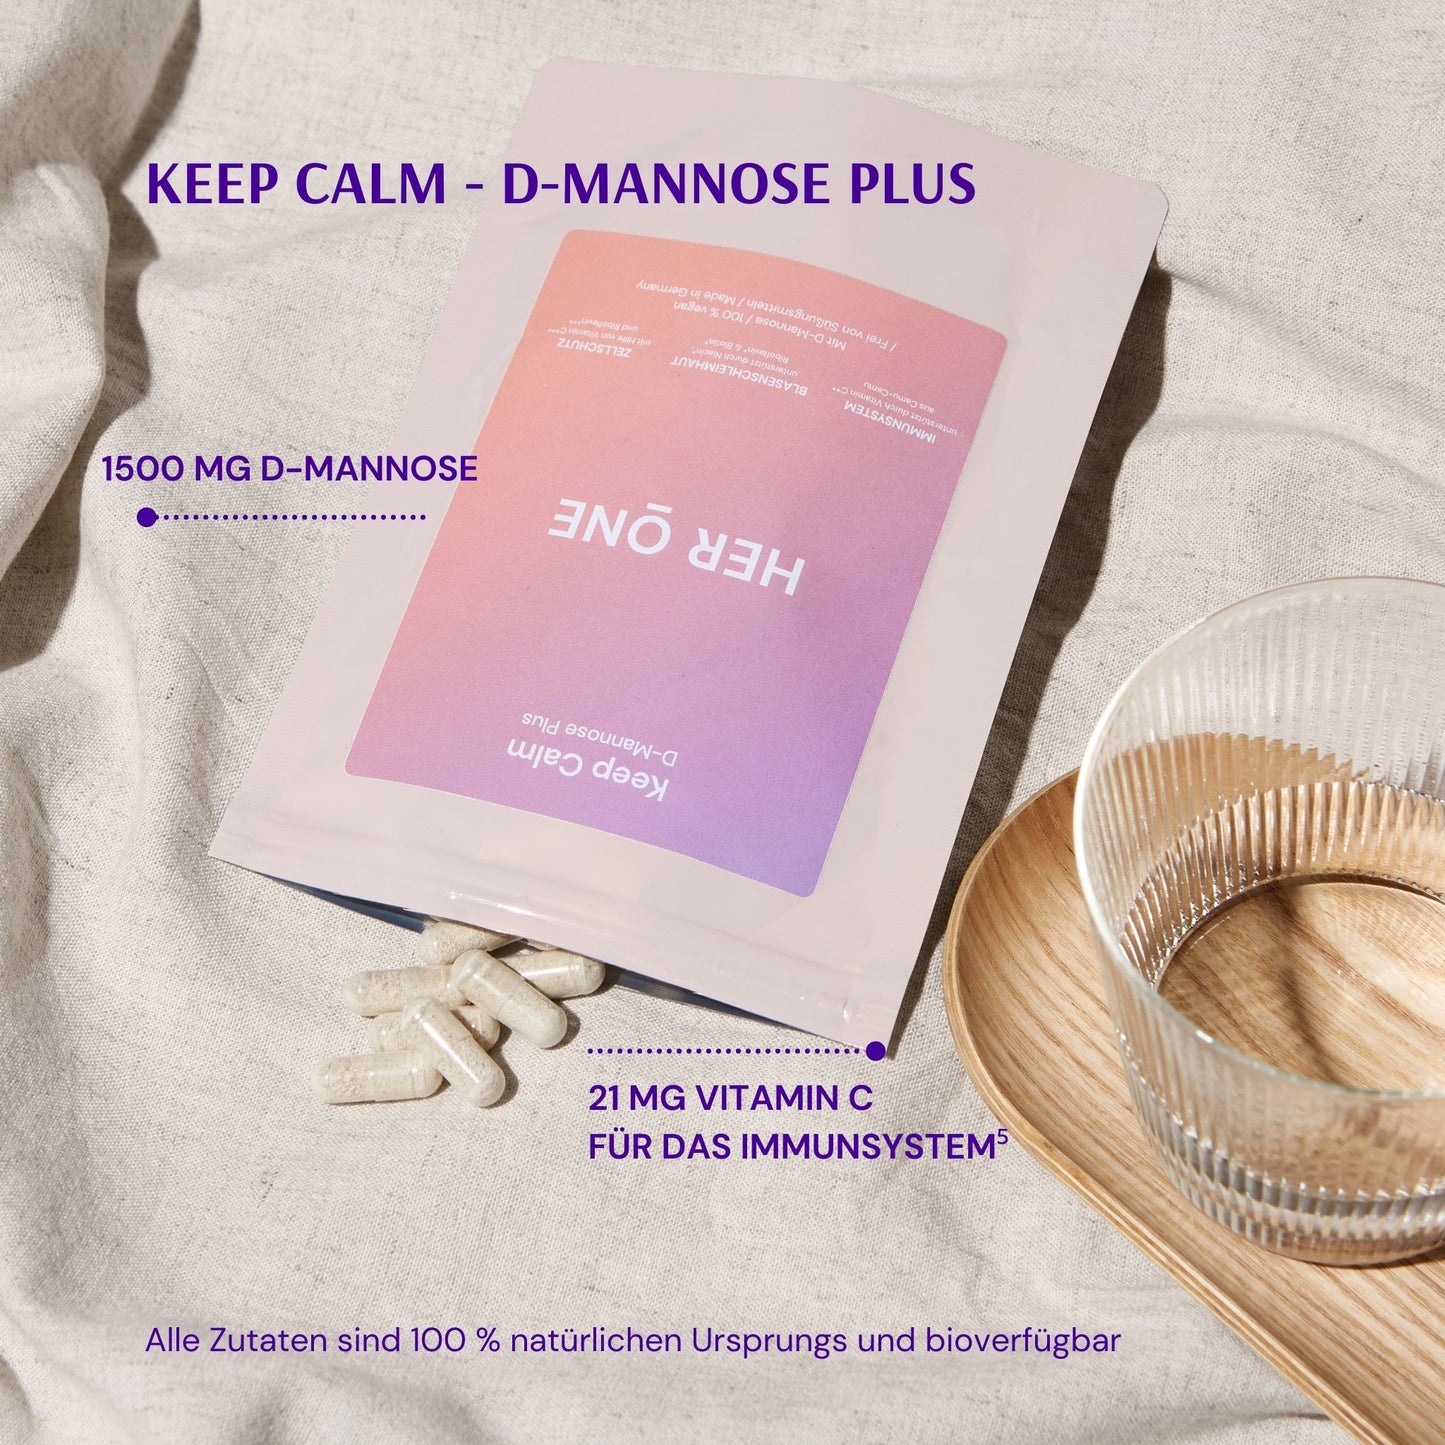 D-Mannose Plus – Keep Calm